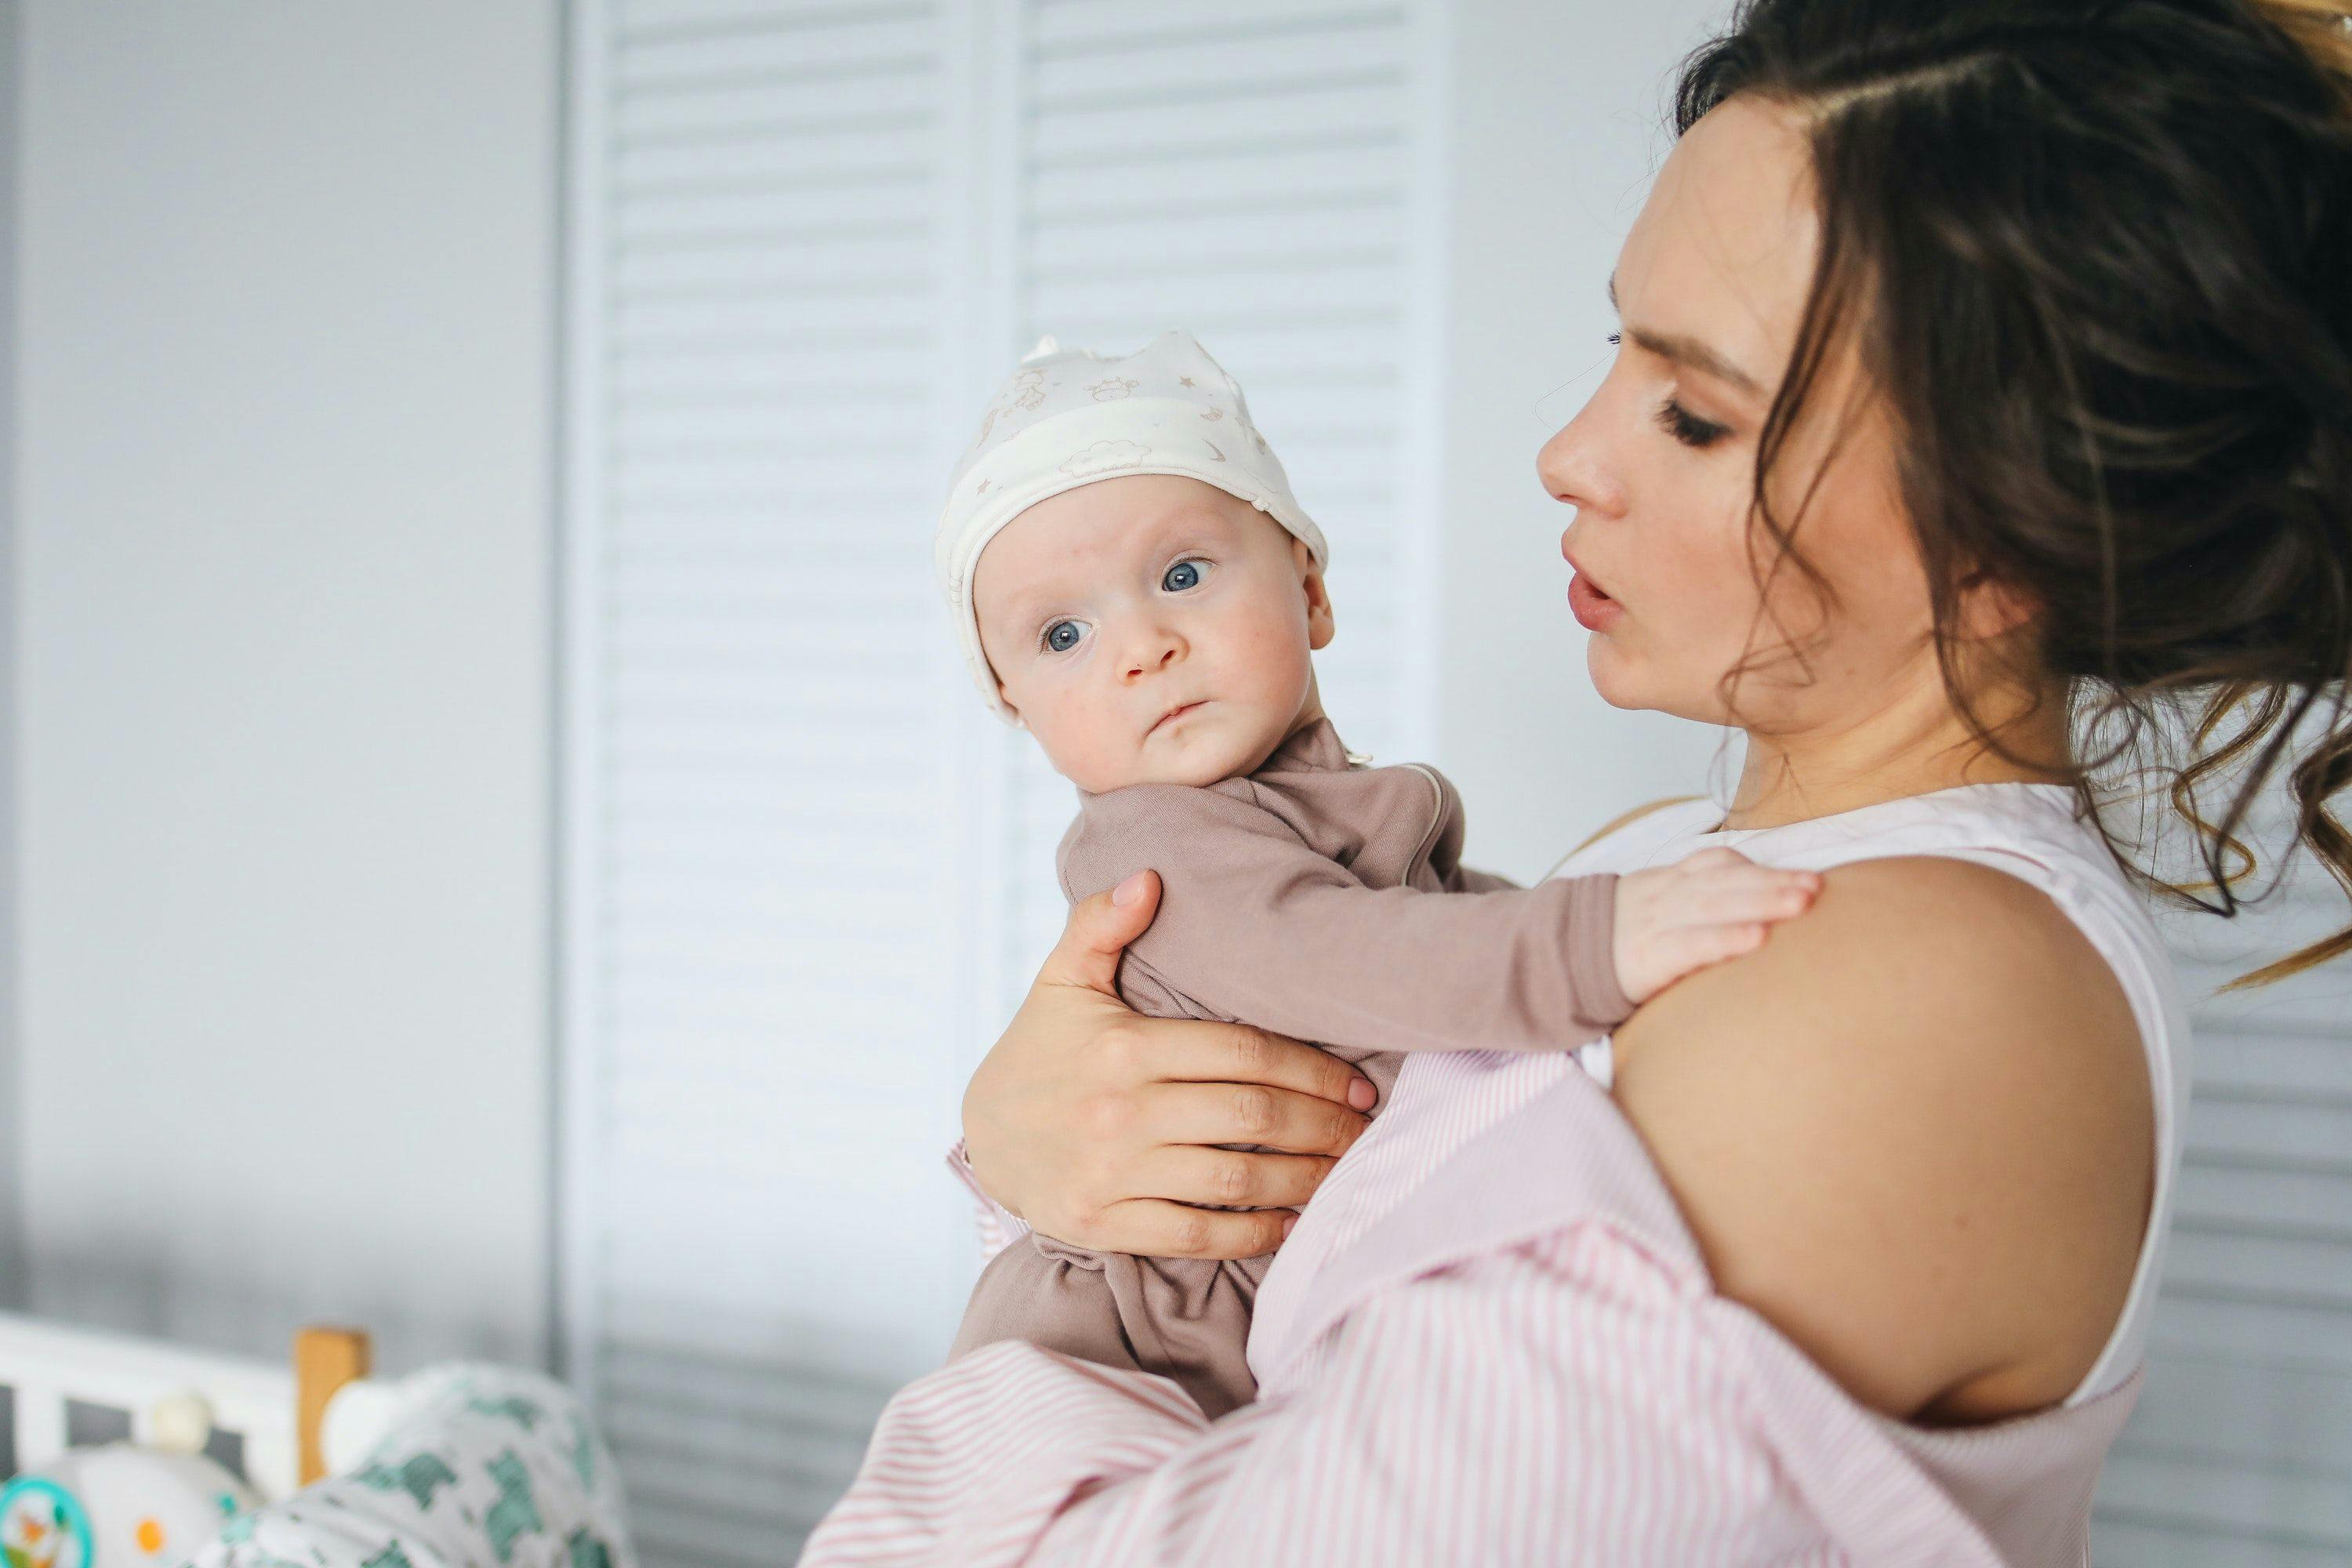 Breastfeeding Associated with Little Infant Plasma Exposure to Dolutegravir